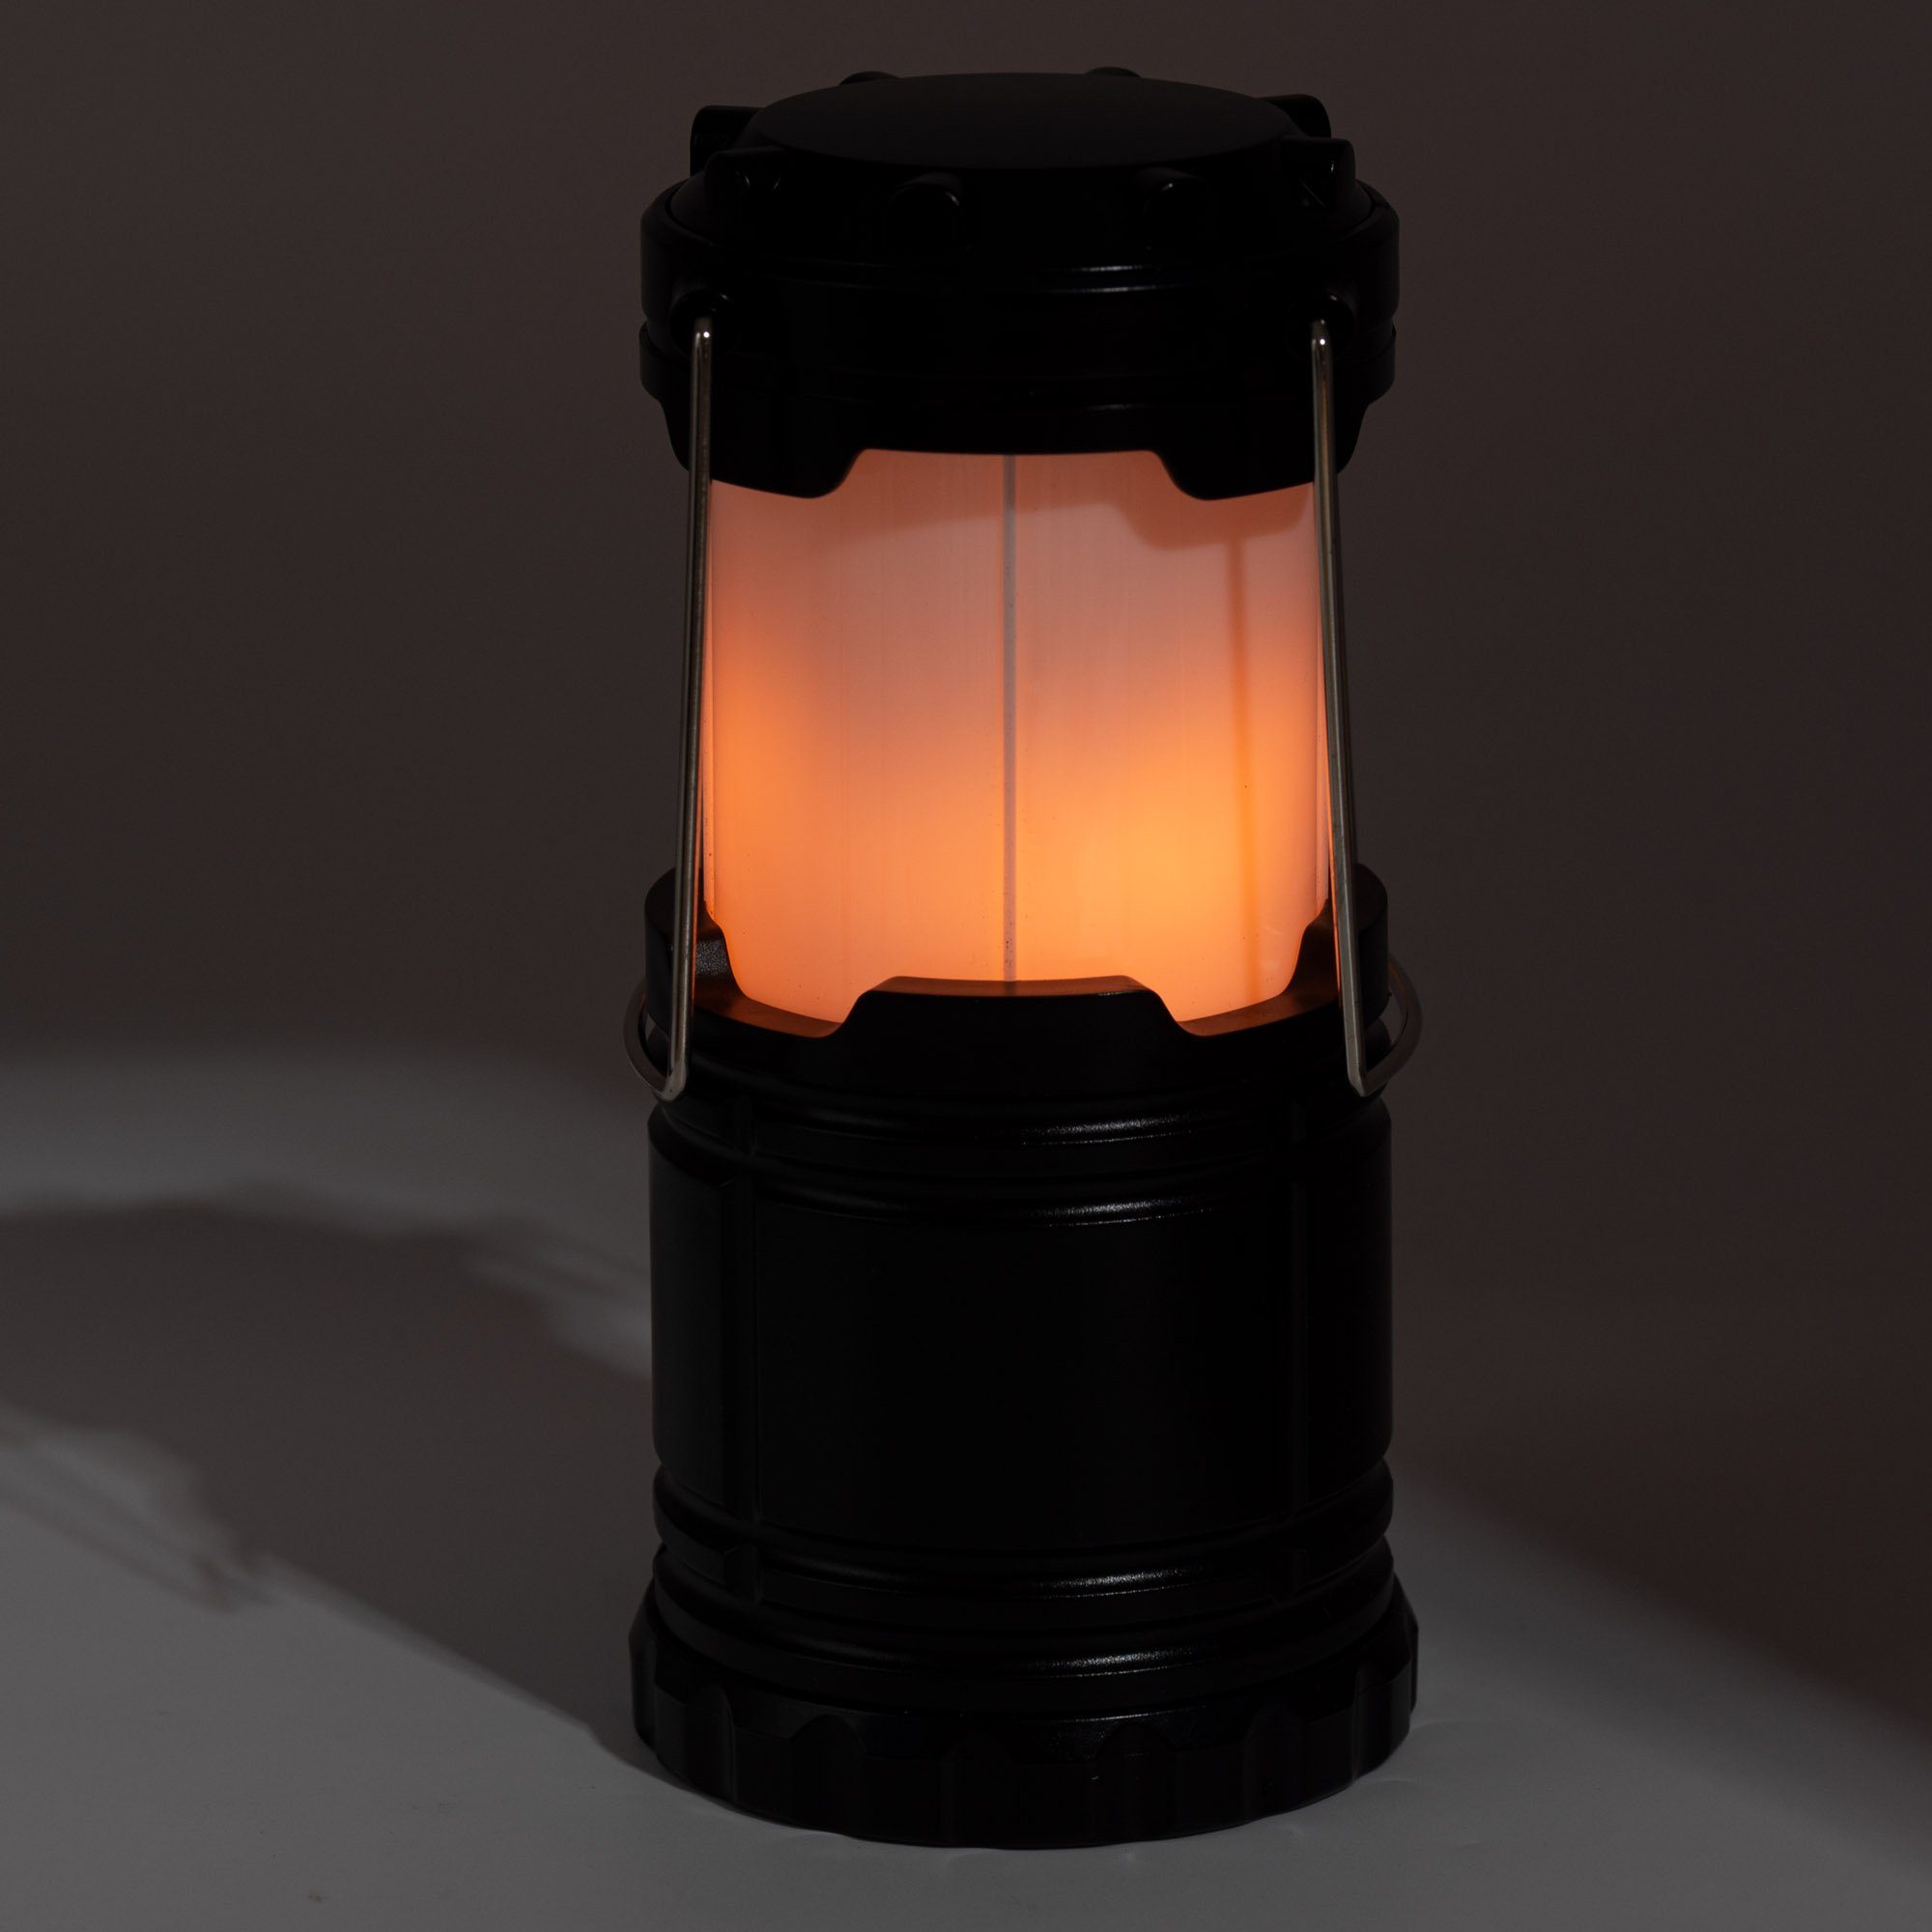 BENSON Taschenlampe 2in1 Campinglampe Batterie, Leuchte Zelt Garten, Effekt Lampe LED Flammen, Laterne